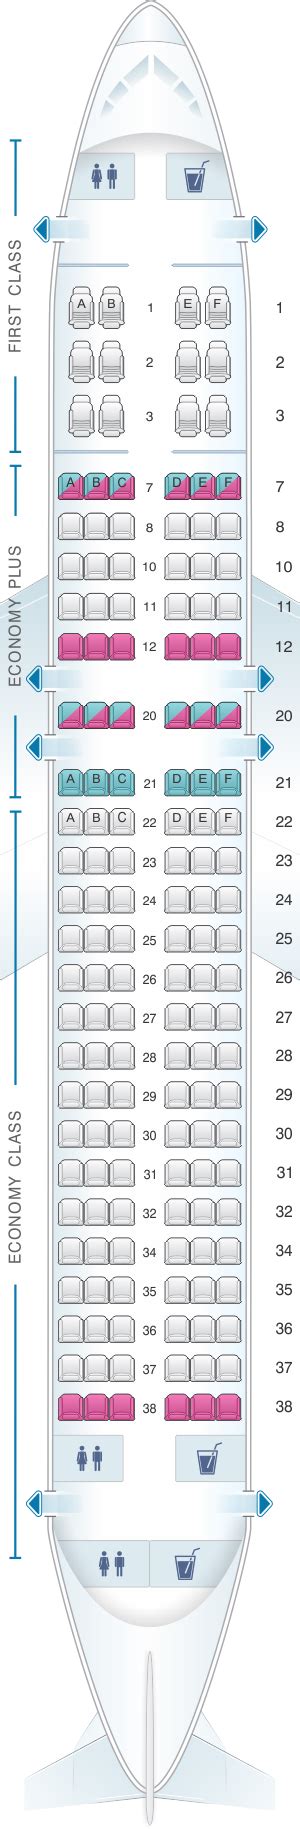 Plan De Cabine United Airlines Airbus A320 Seatmaestrofr